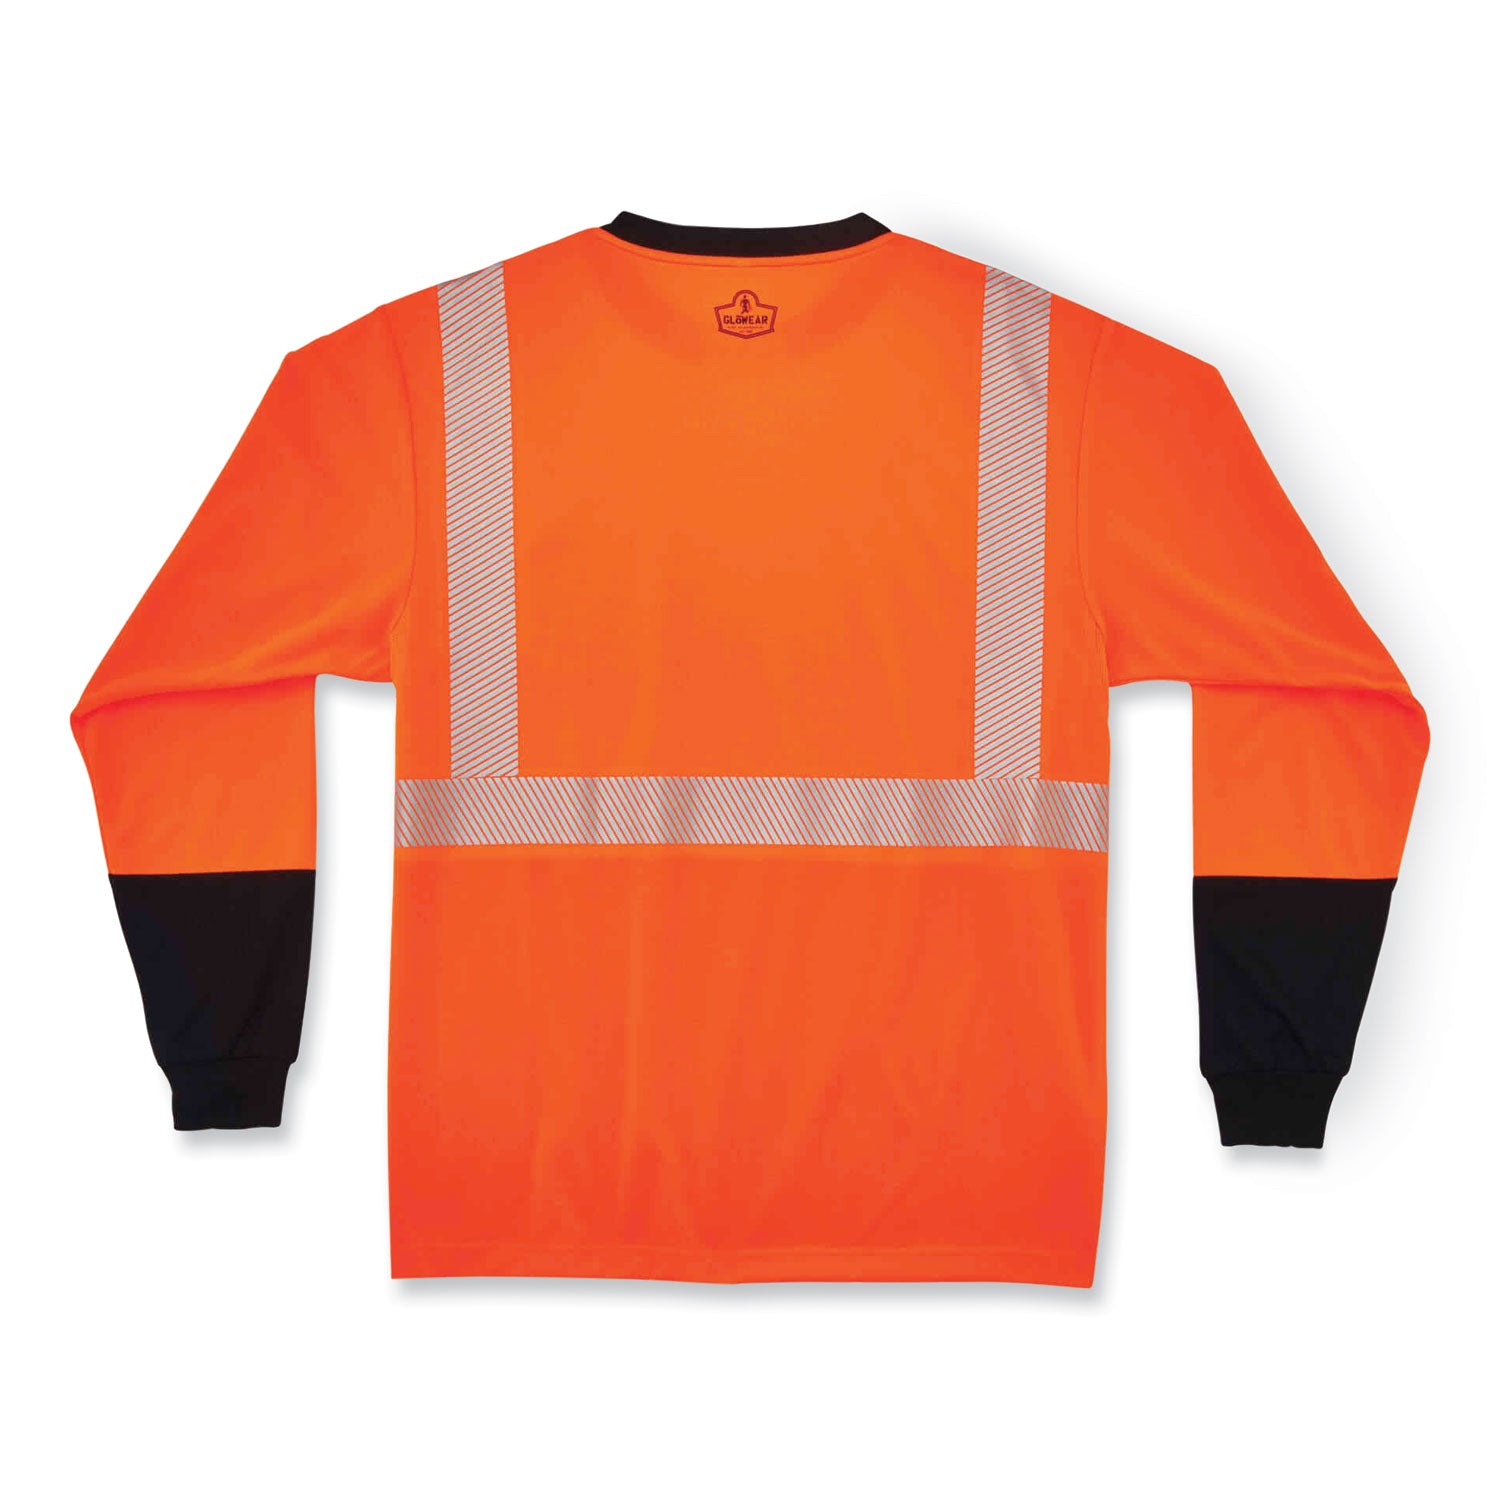 glowear-8281bk-class-2-long-sleeve-shirt-with-black-bottom-polyester-4x-large-orange-ships-in-1-3-business-days_ego22688 - 3